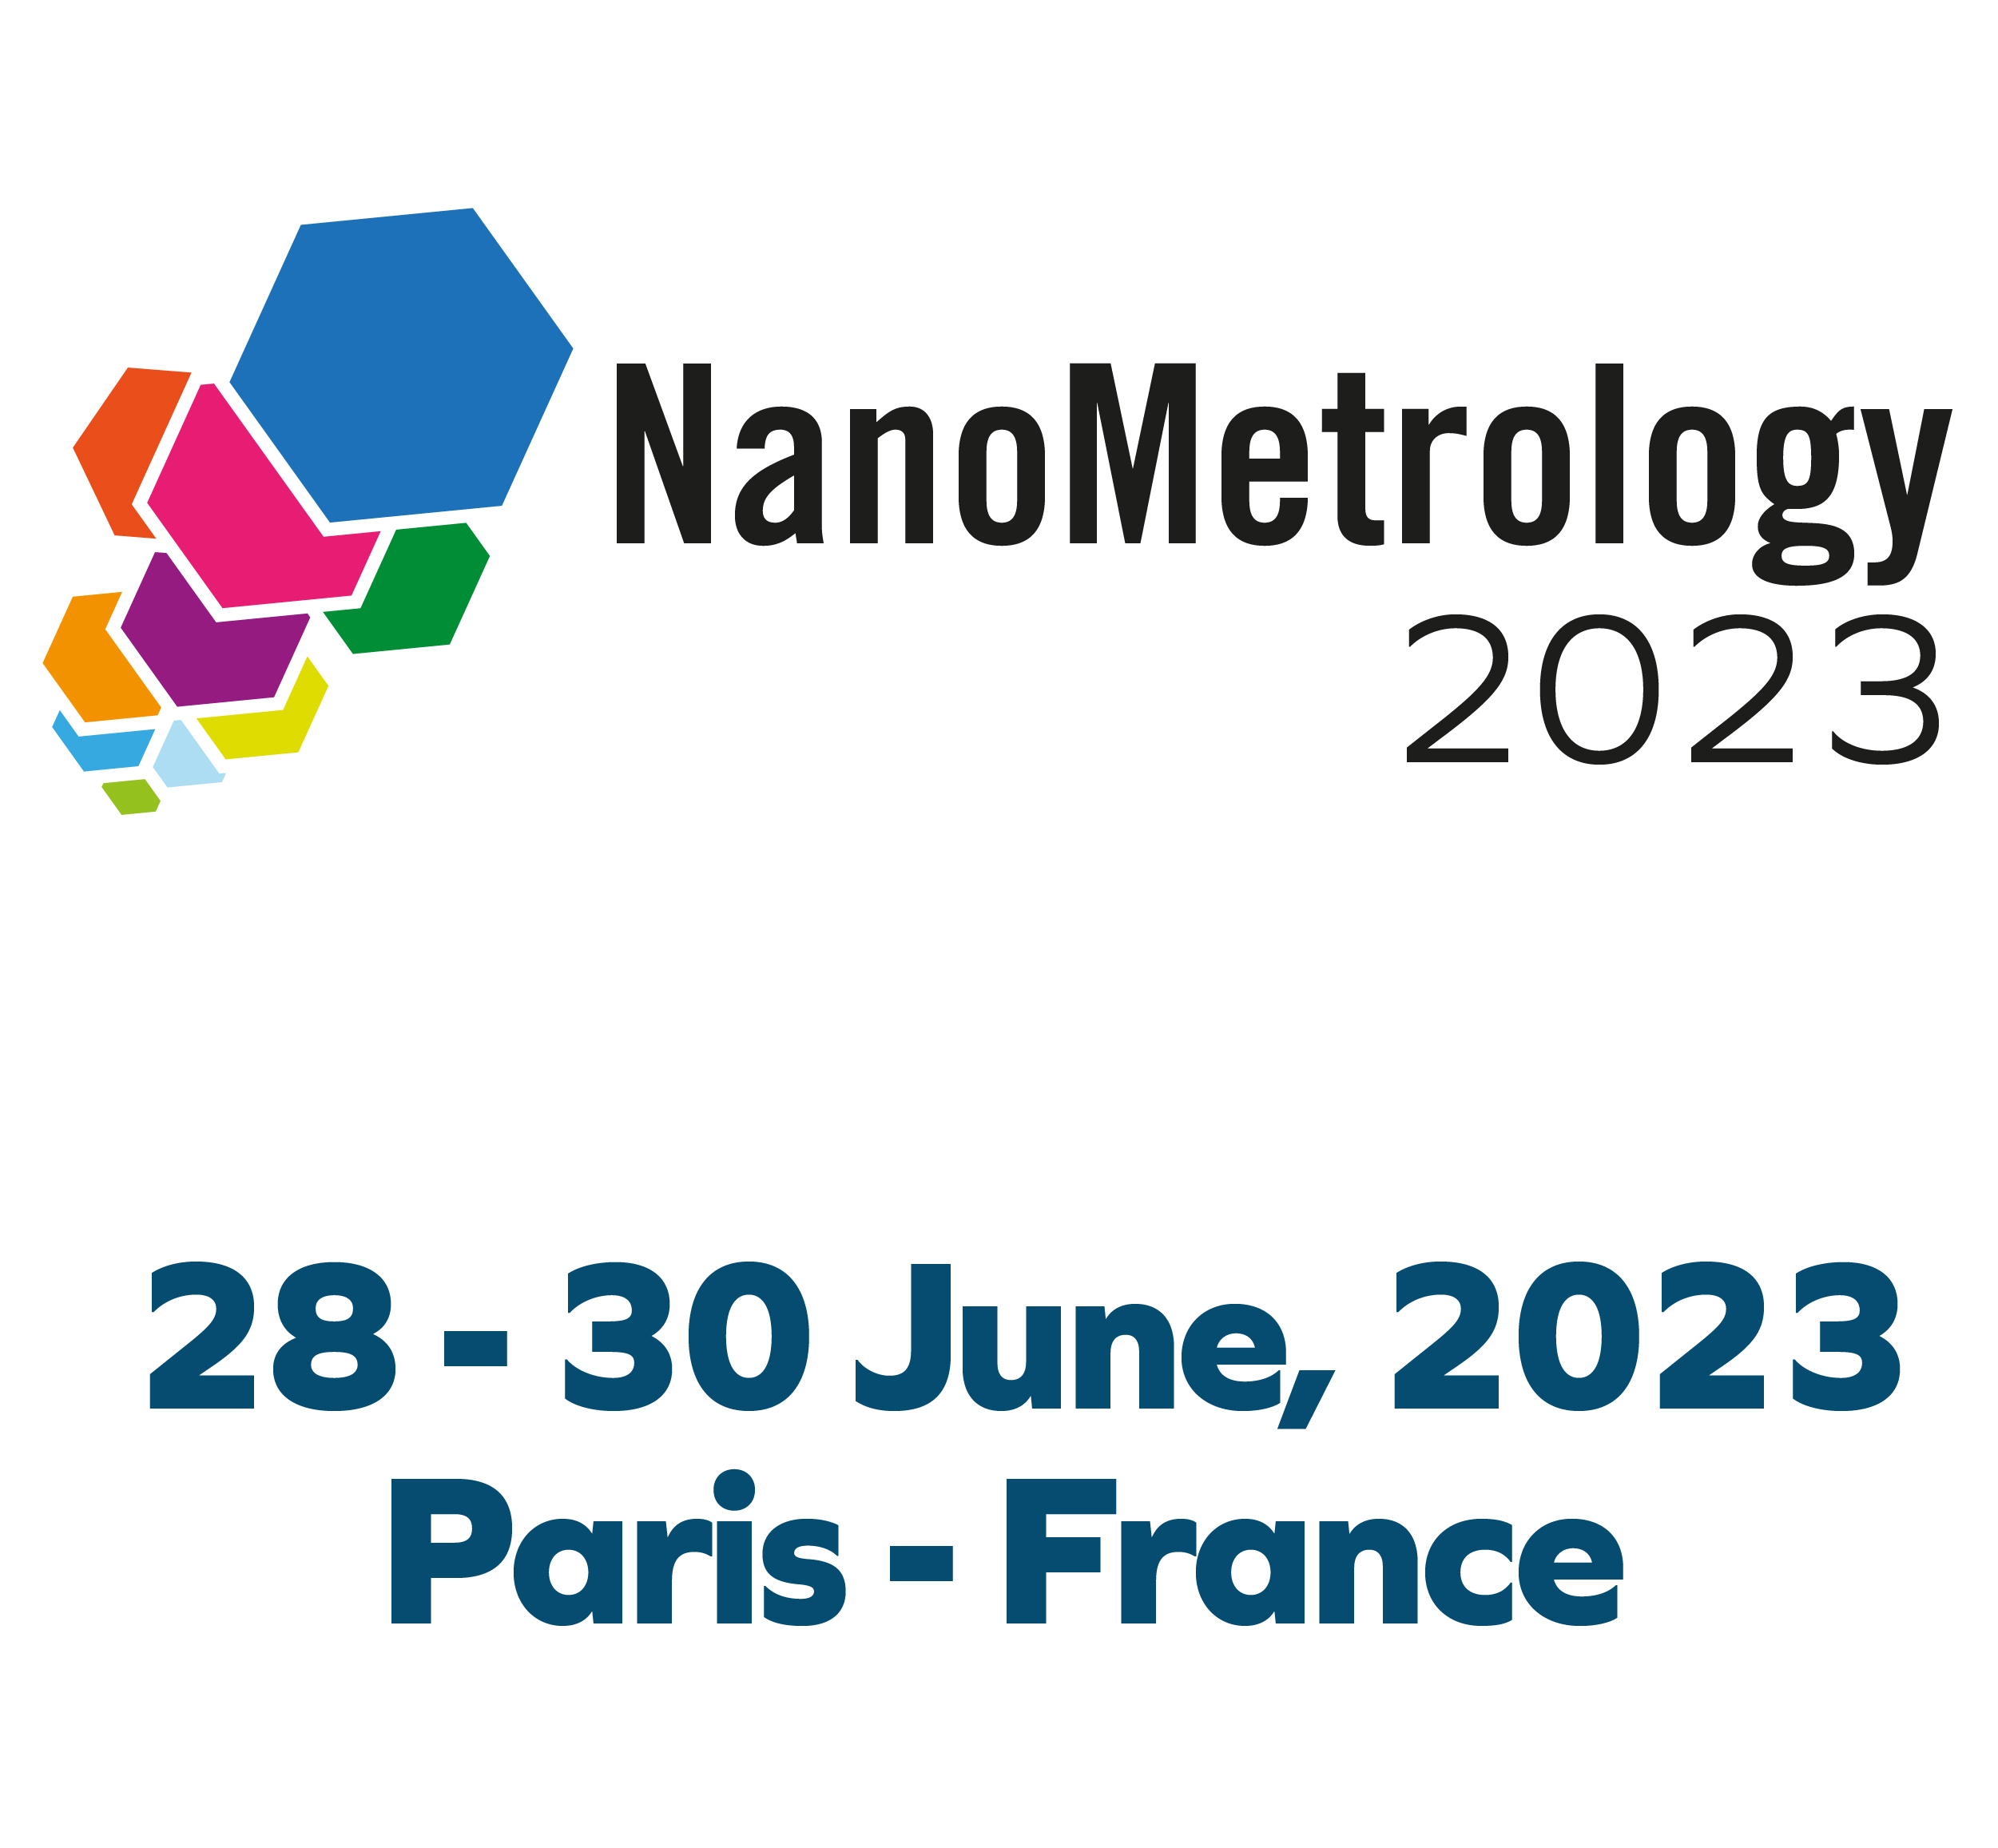 The 8th Ed. of NanoMetrology 2023 International Conference